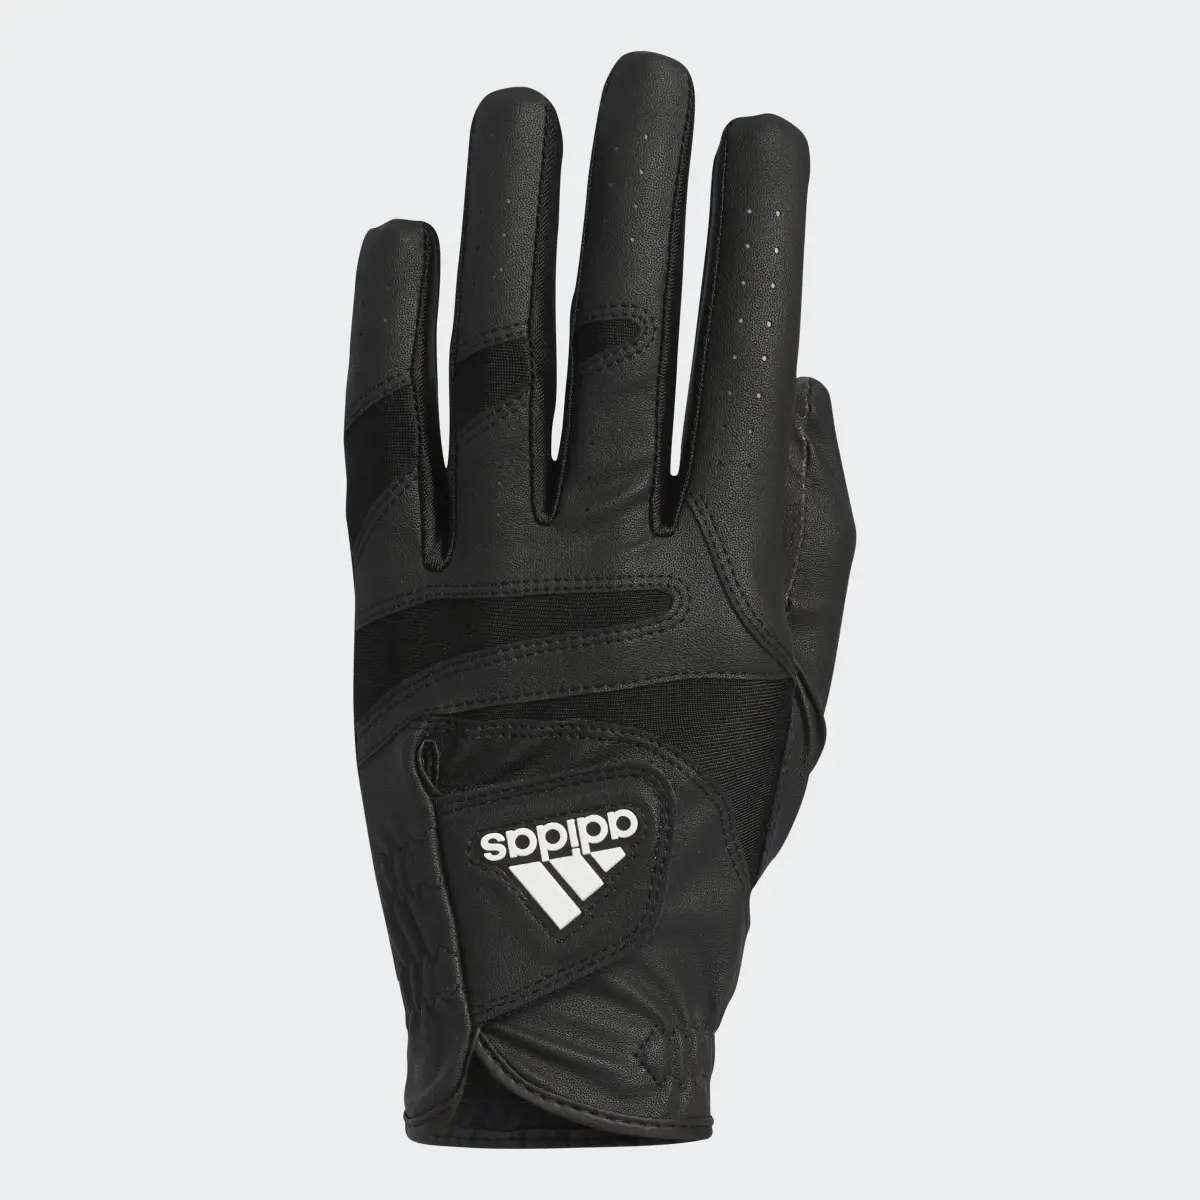 Adidas Aditech 22 Golf Glove Single. 2